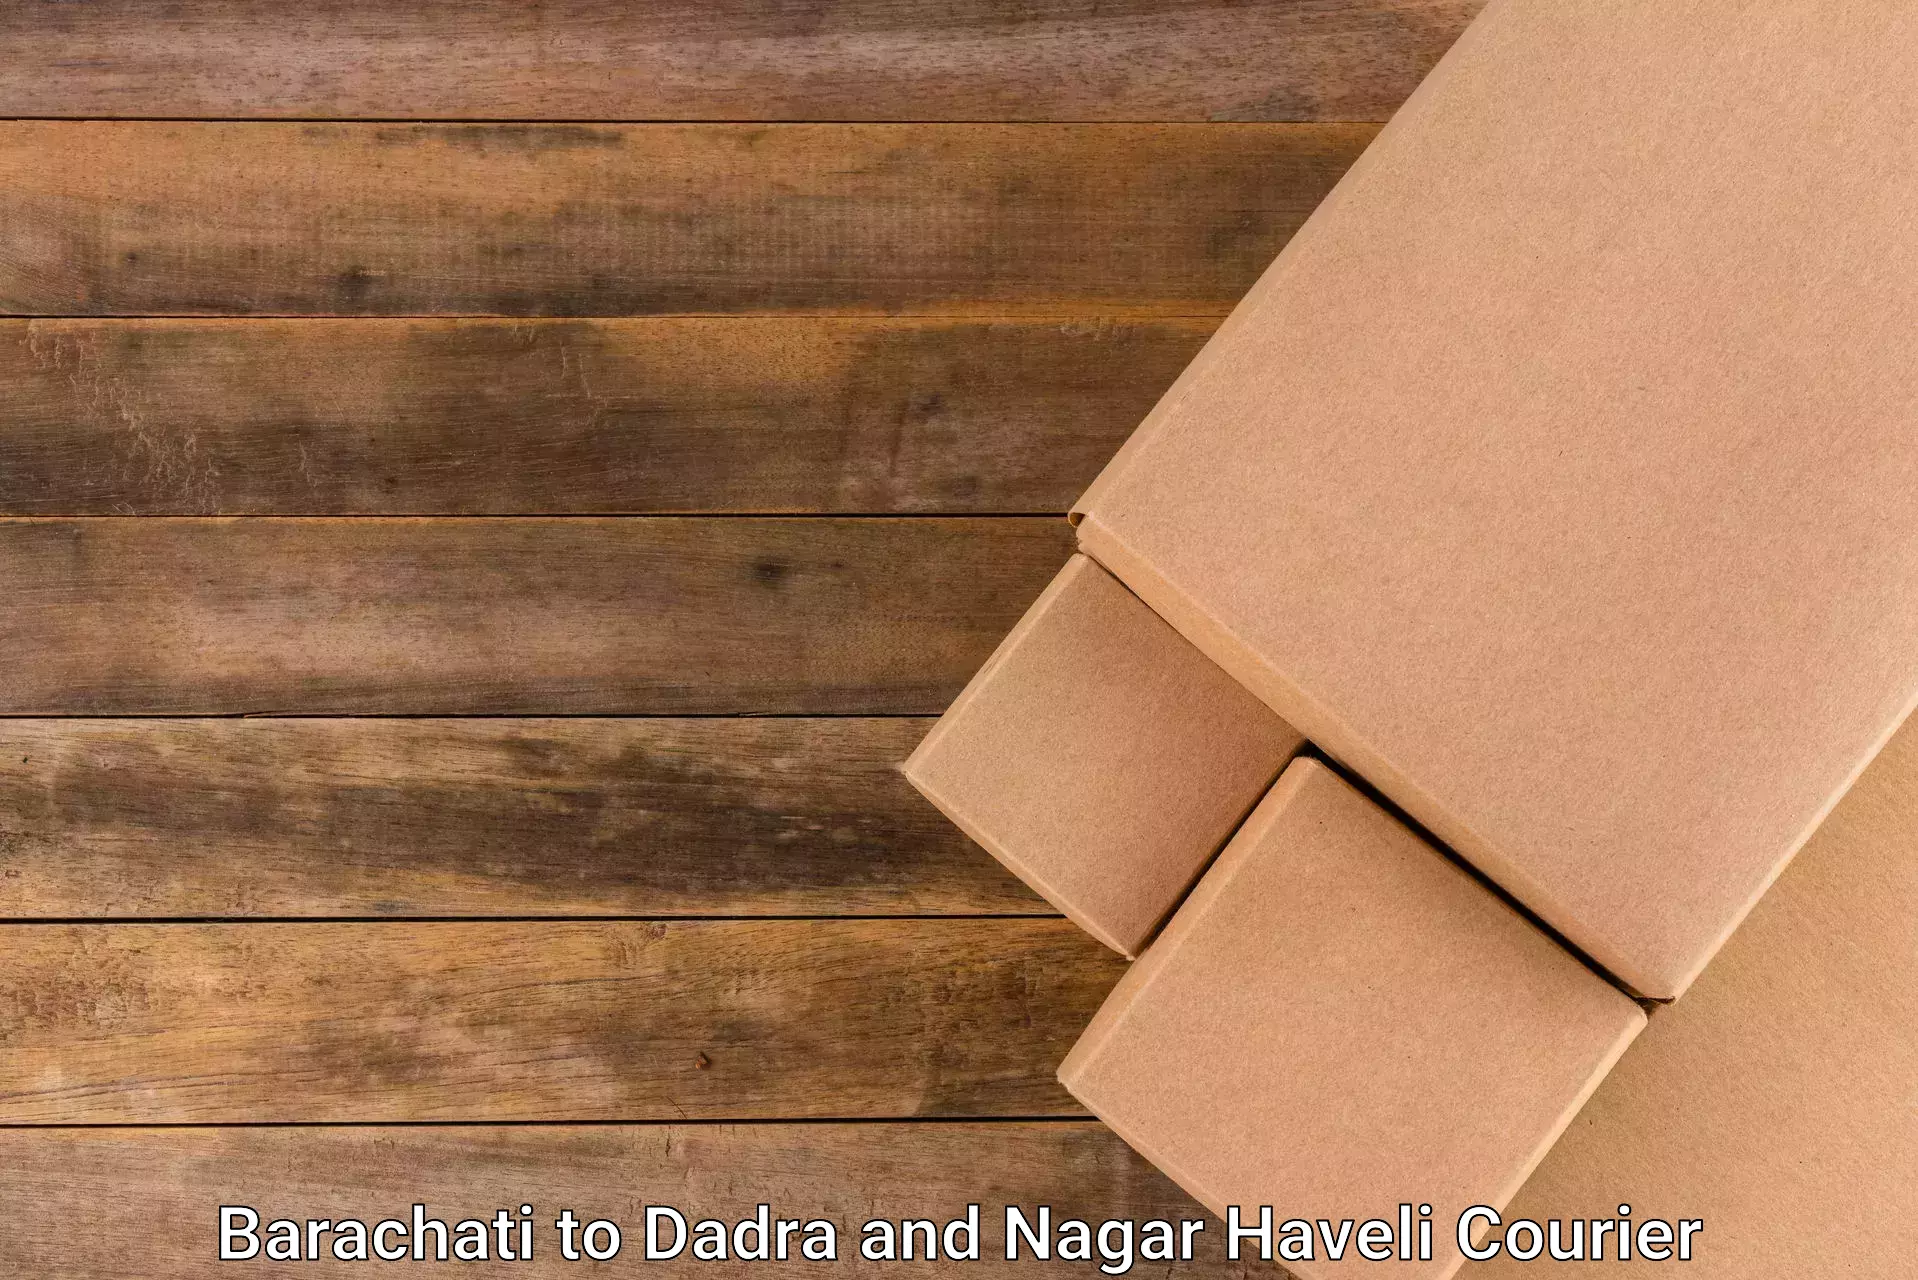 Express delivery capabilities Barachati to Dadra and Nagar Haveli